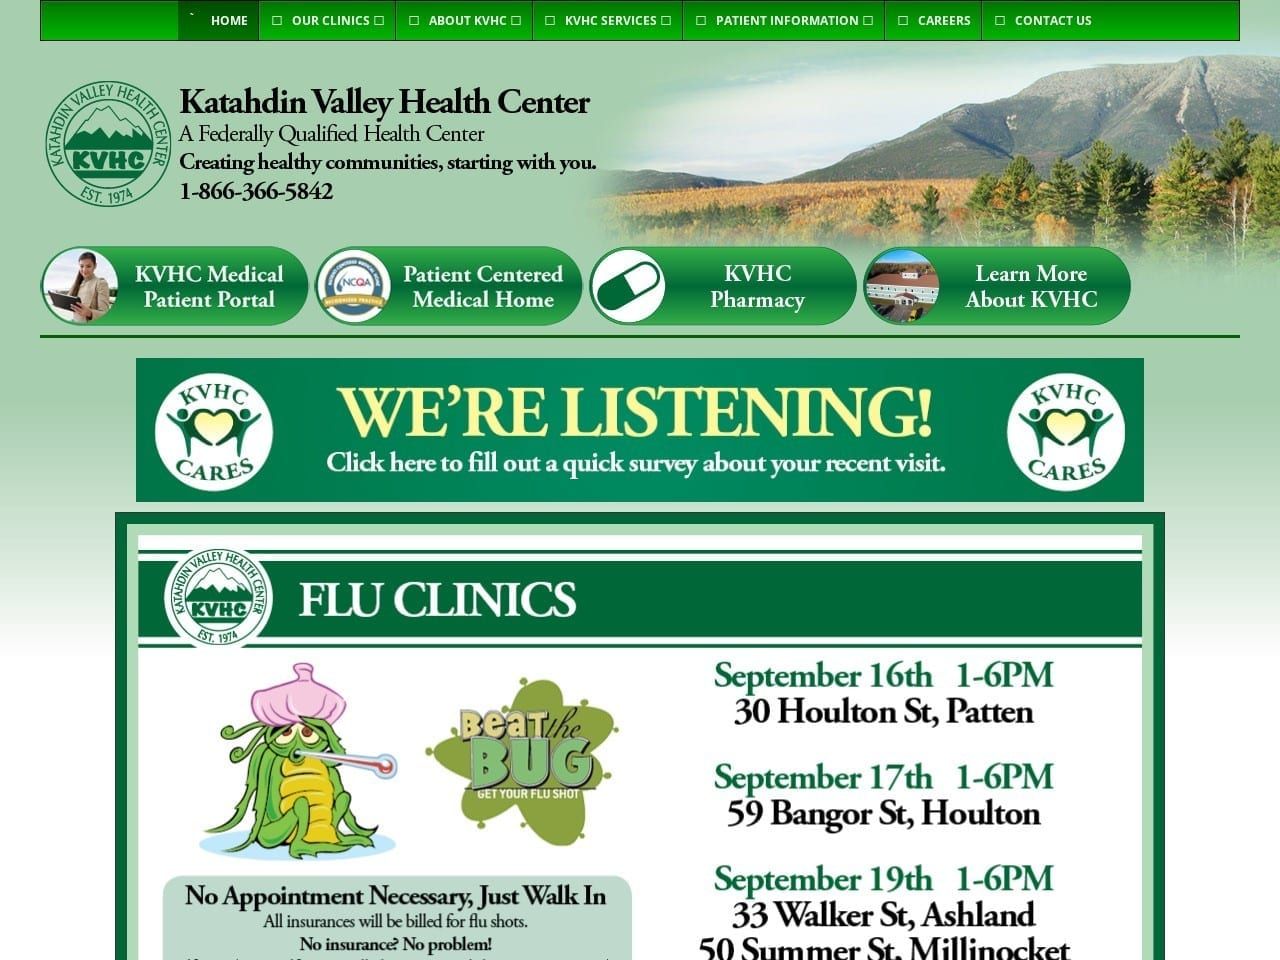 Katahdin Valley Health Center Website Screenshot from kvhc.org